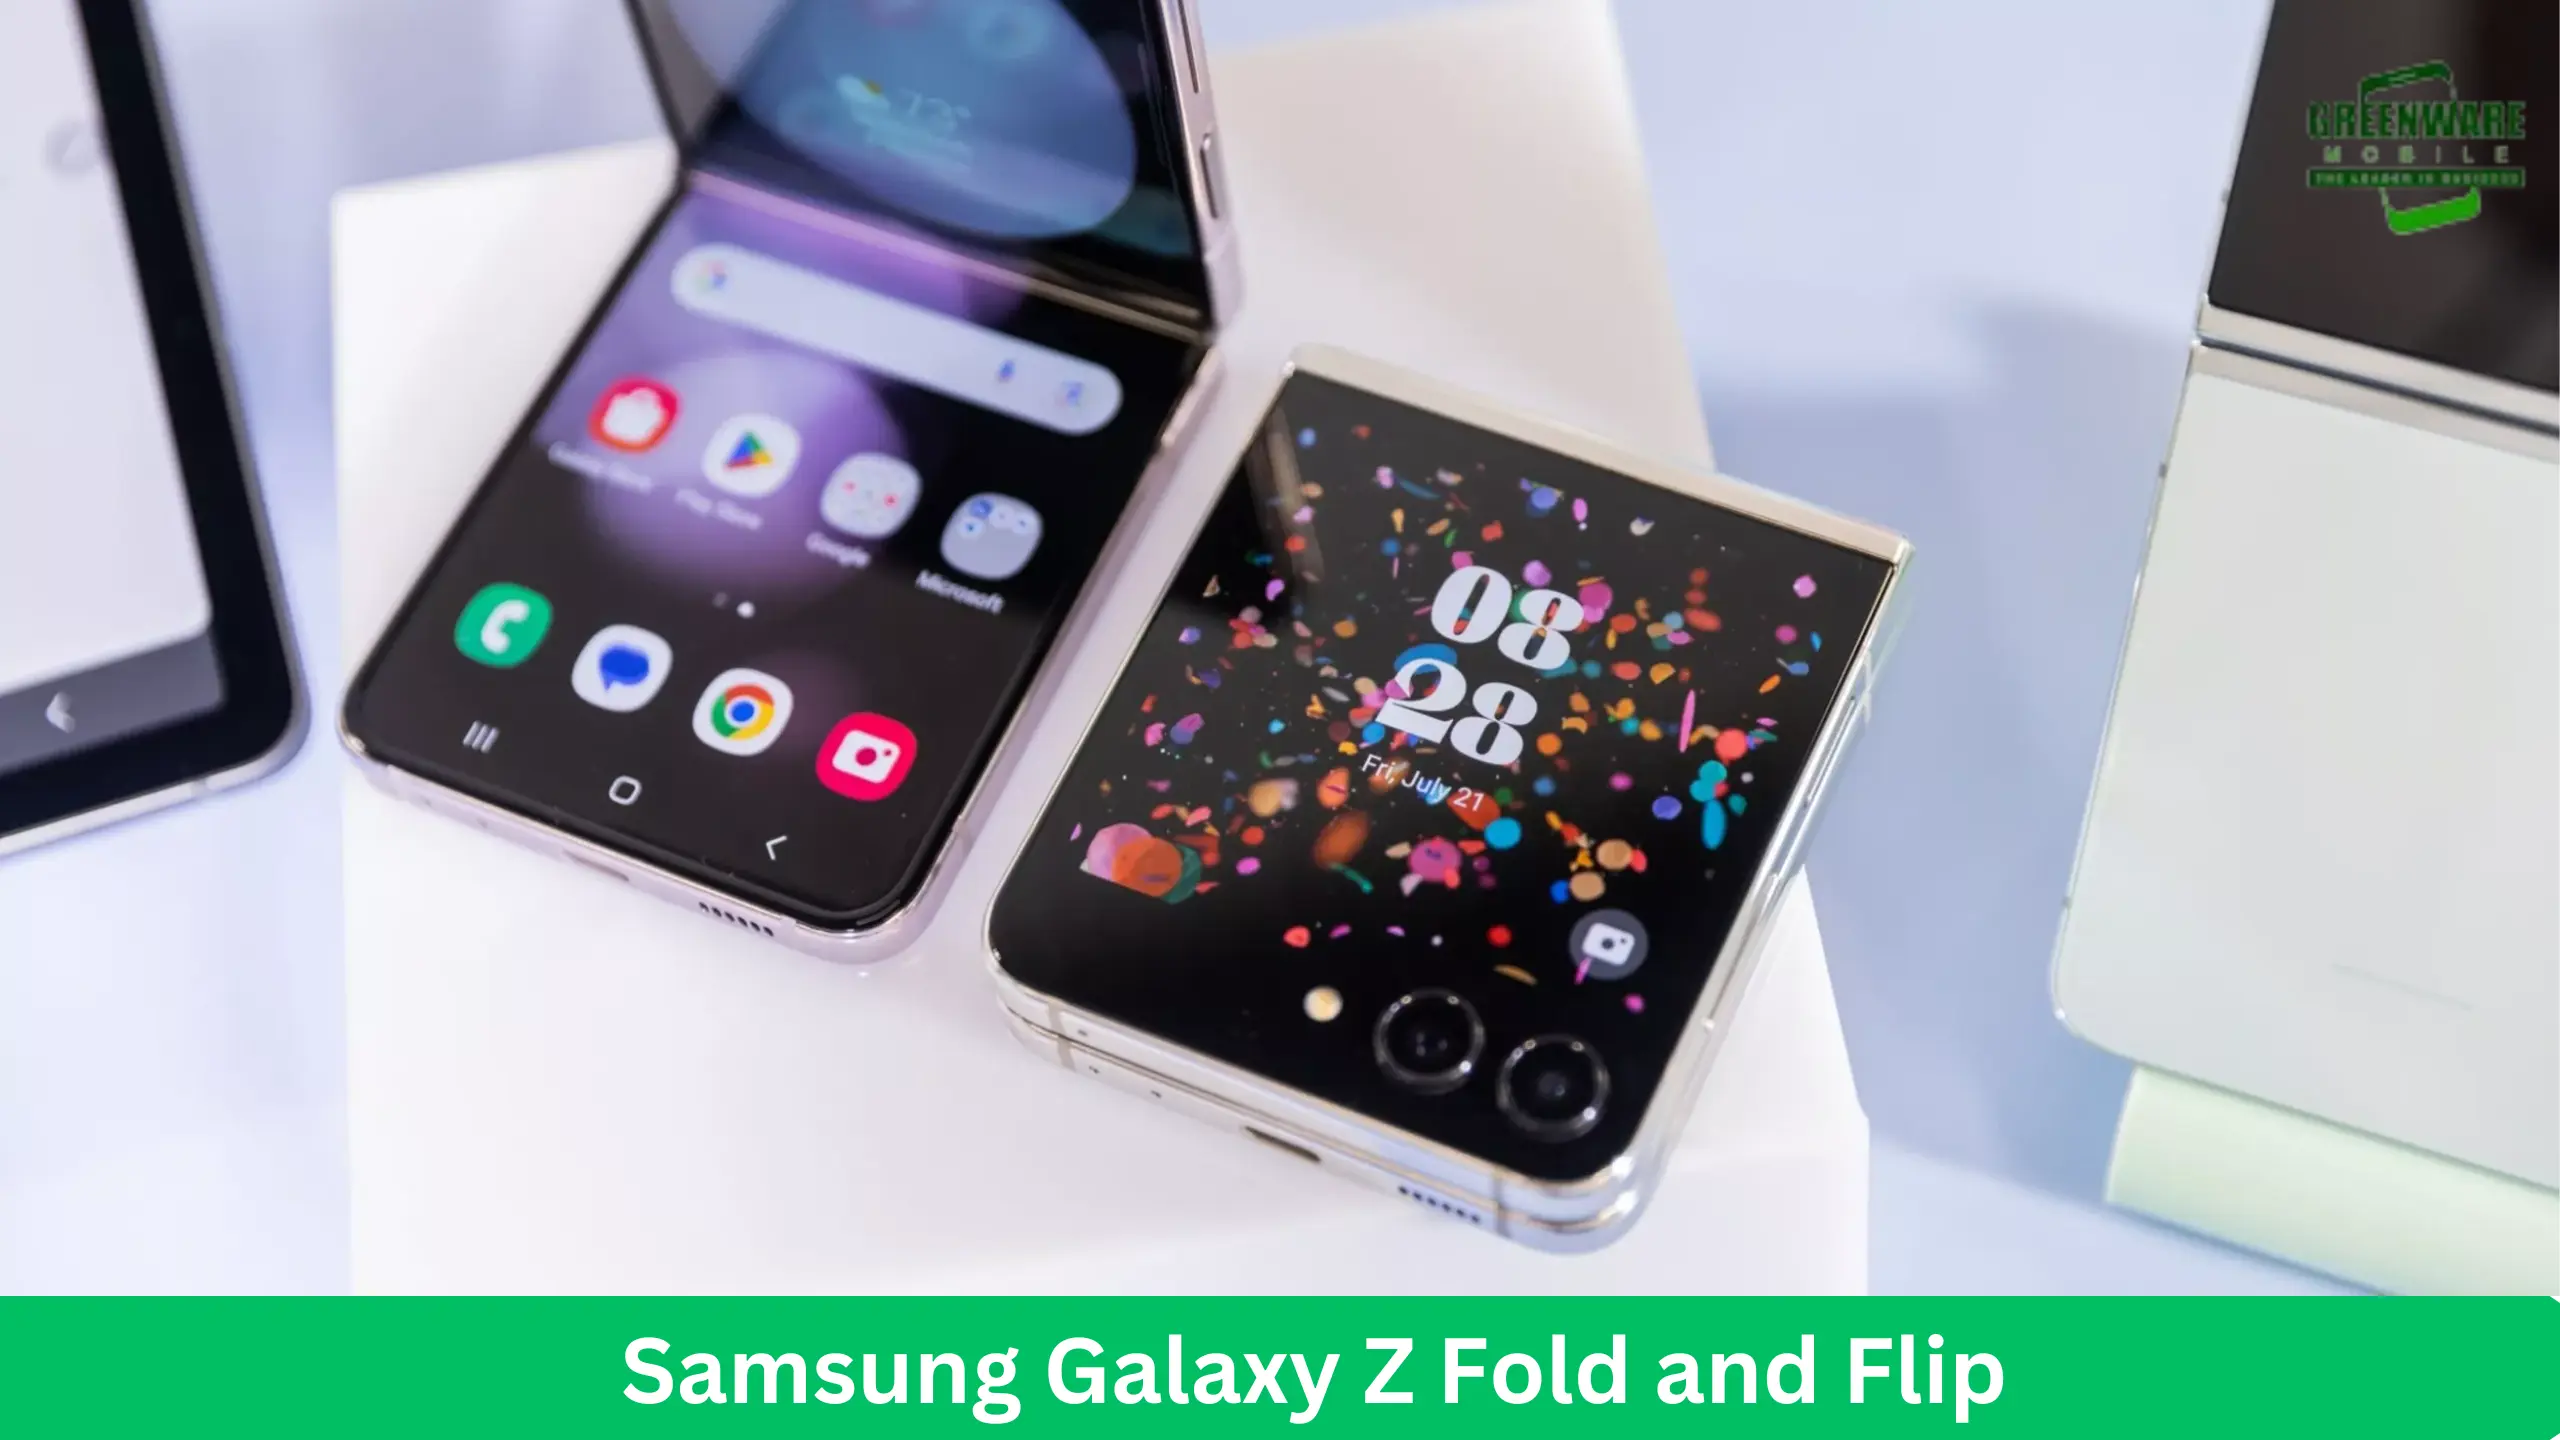 Samsung Galaxy Z Fold and Flip